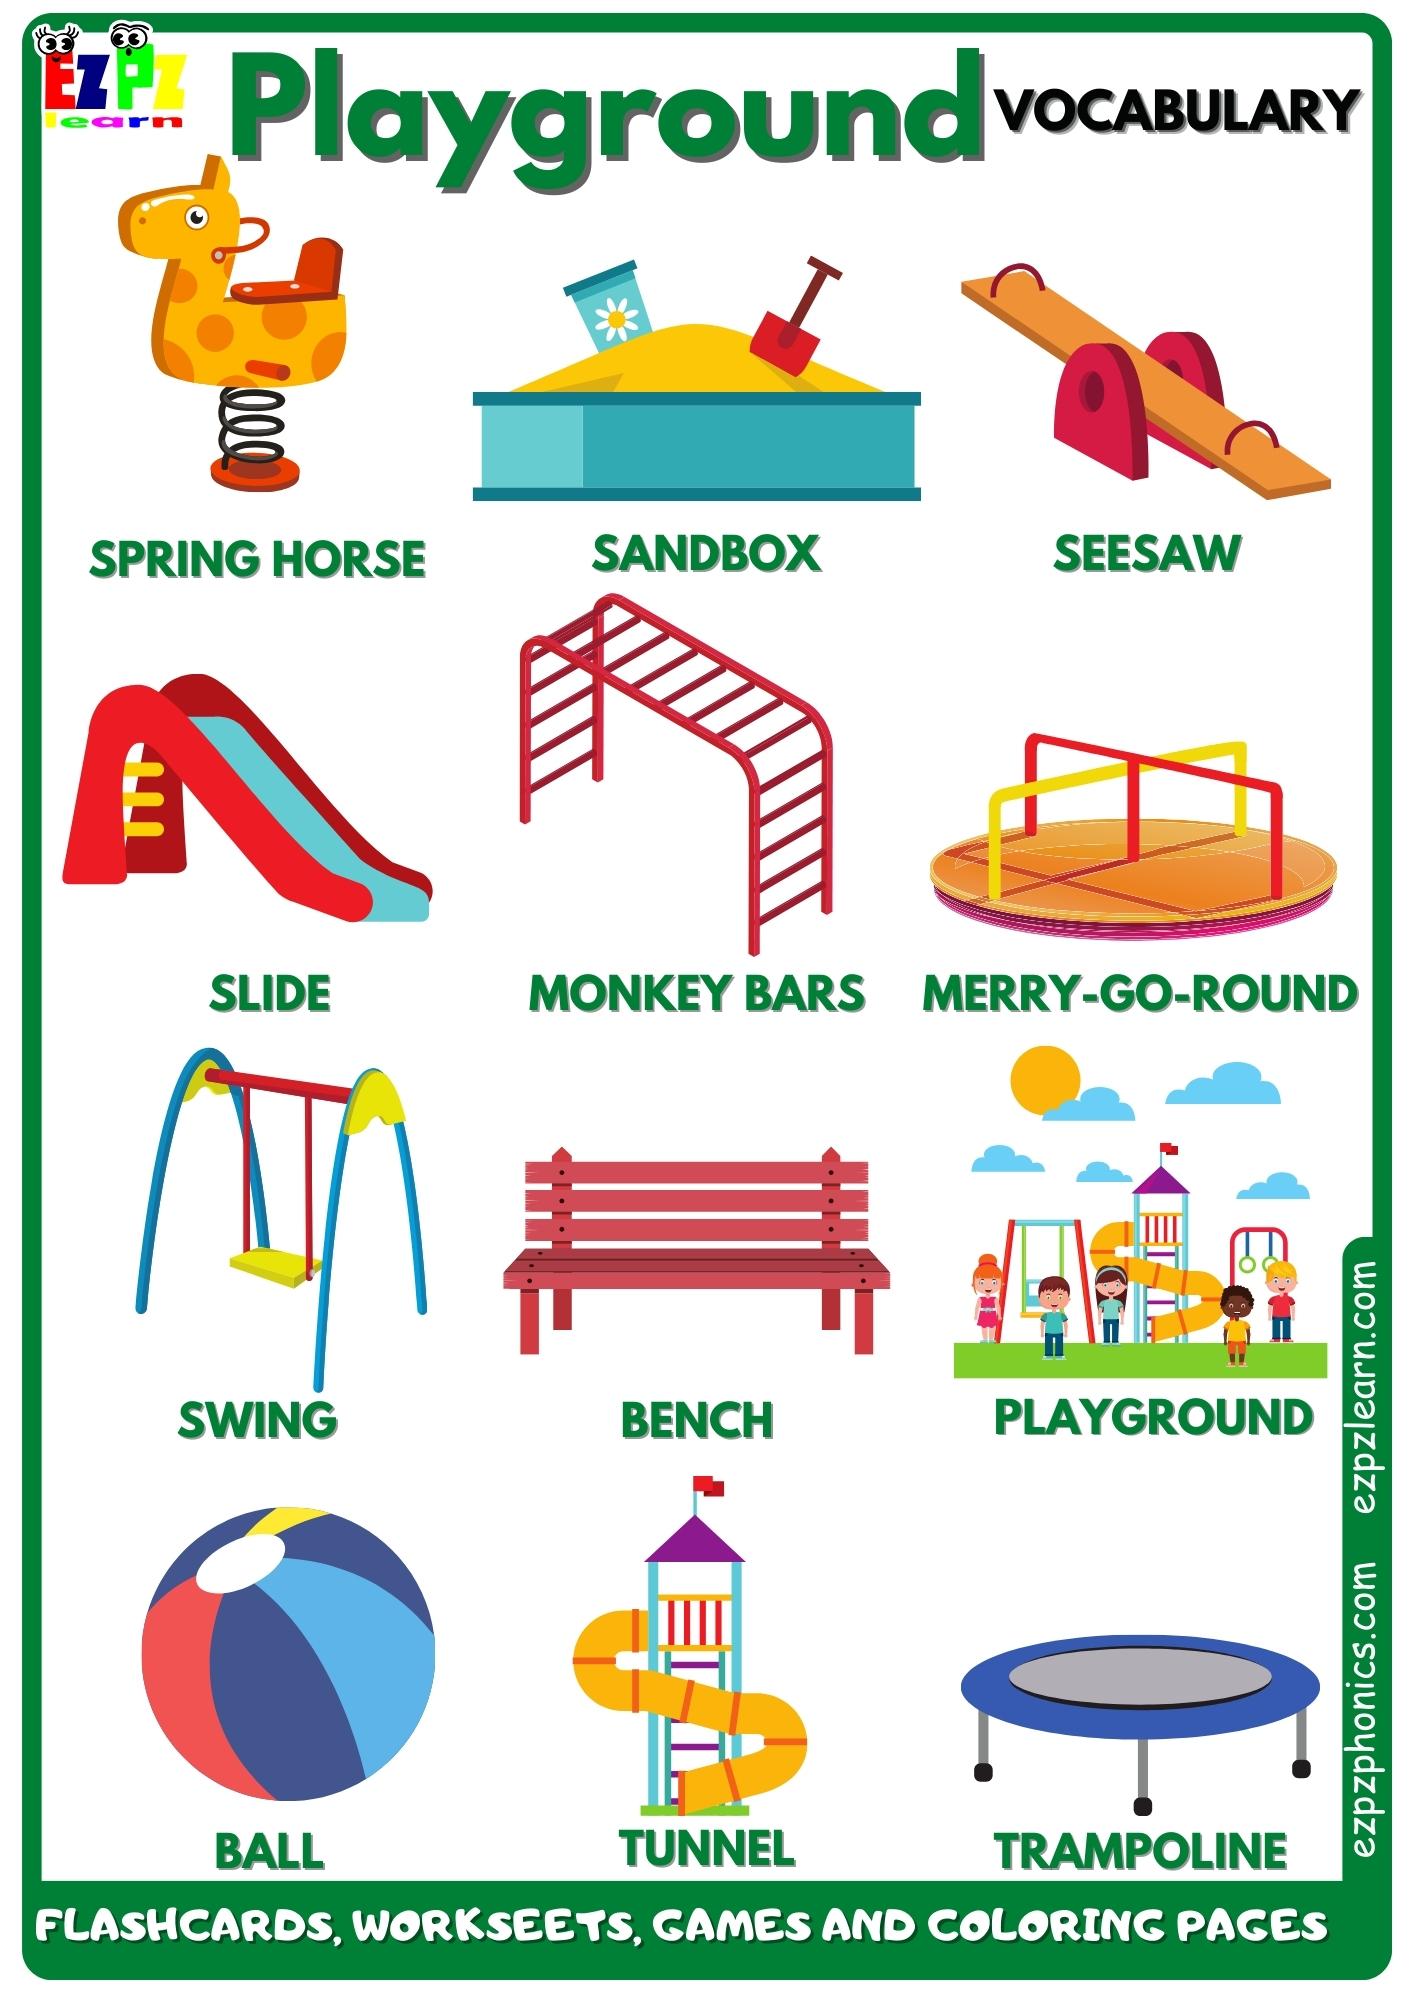 Playground Vocabulary Free English Vocabulary Flashcards